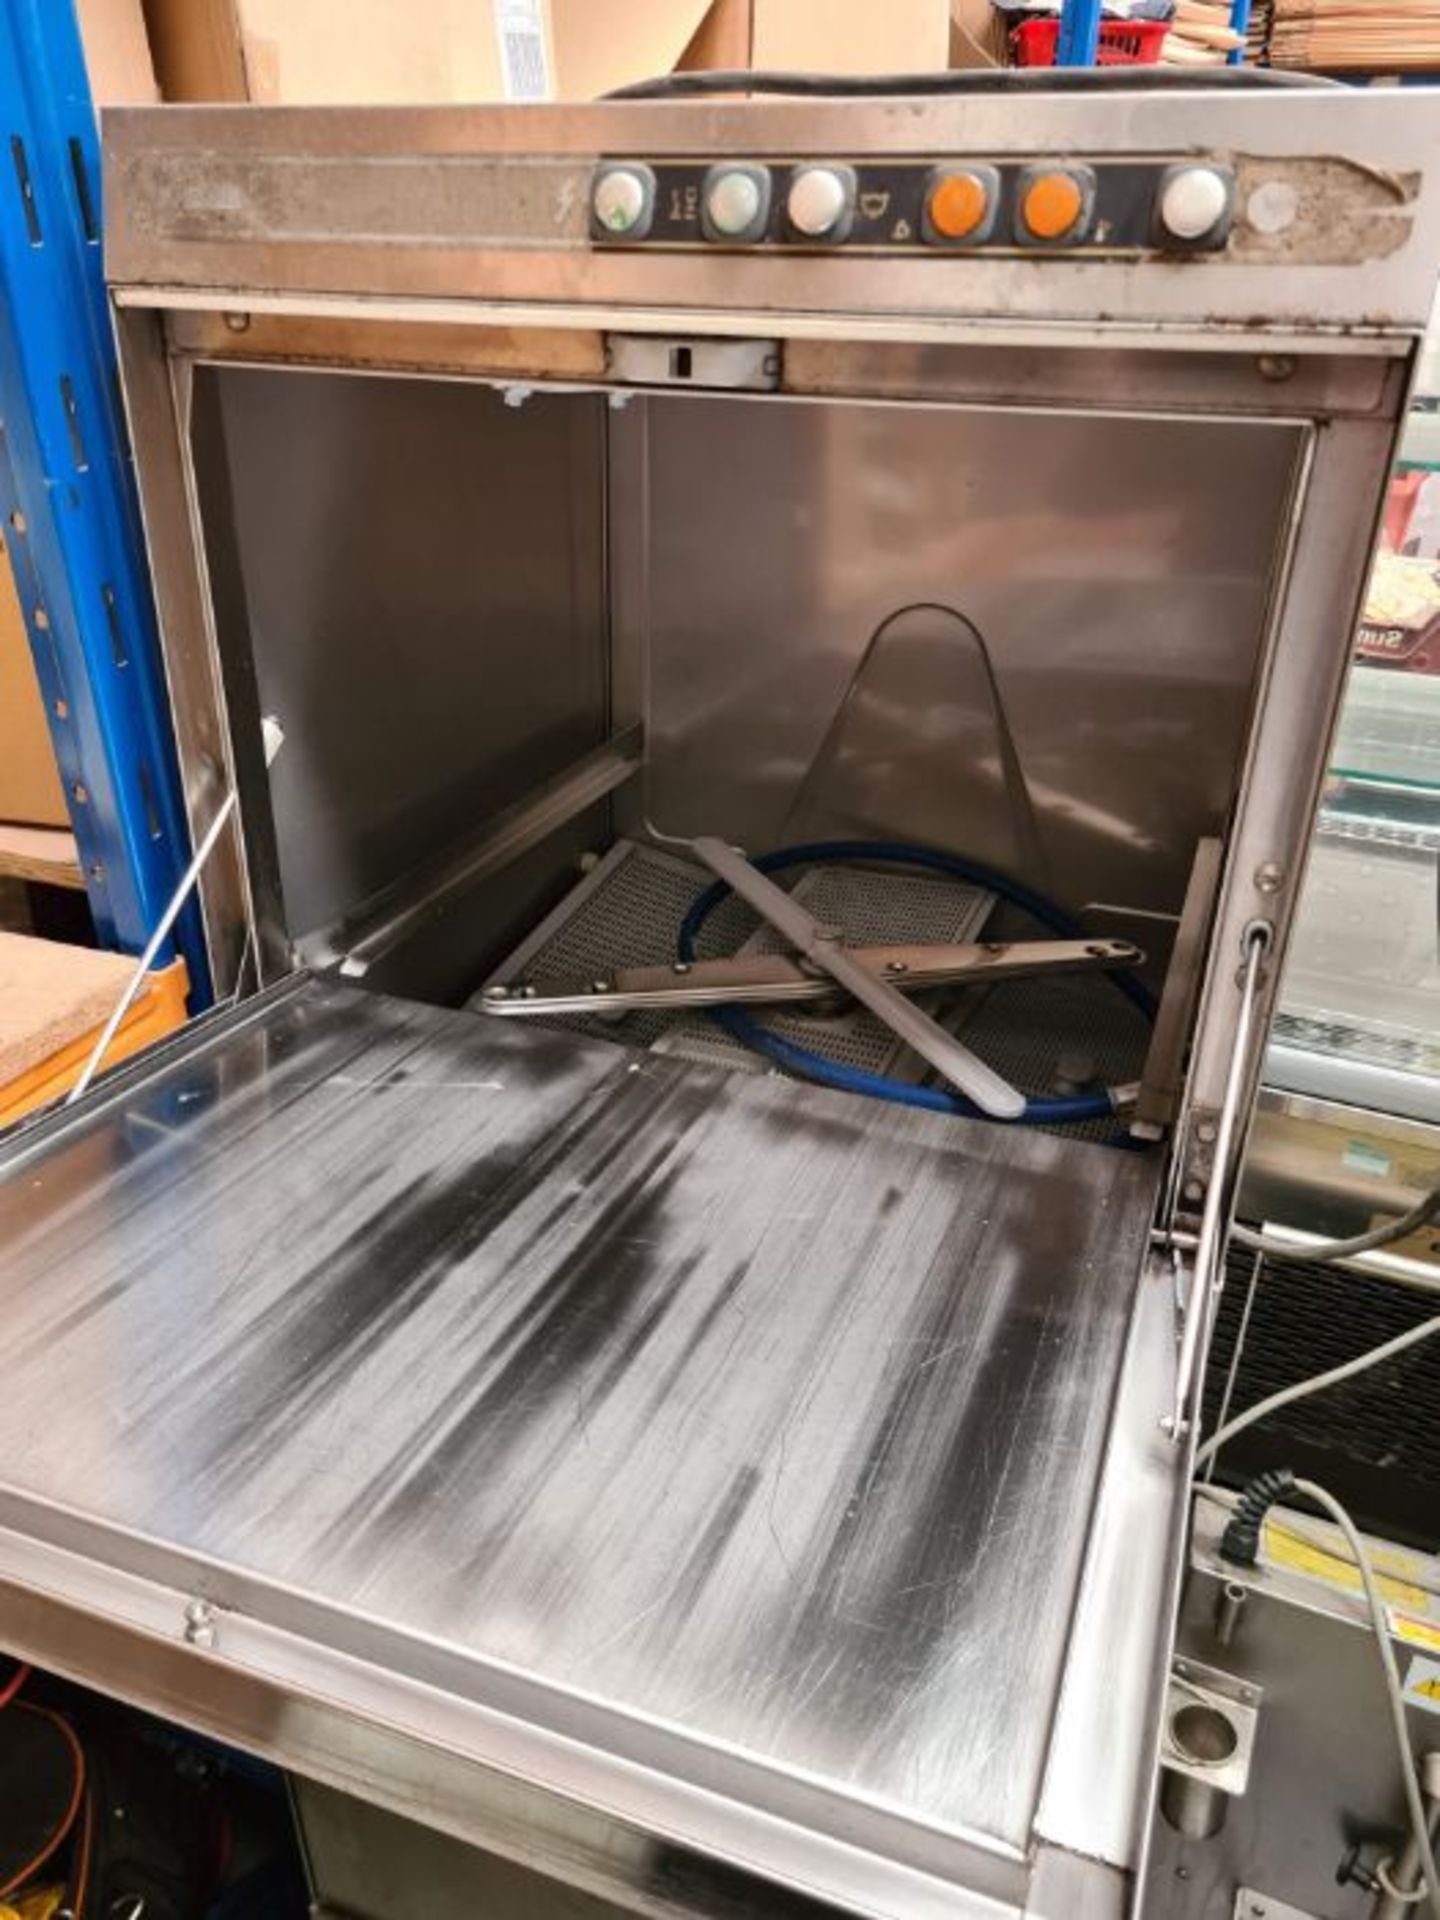 Hobart under counter dishwasher. - Image 2 of 2